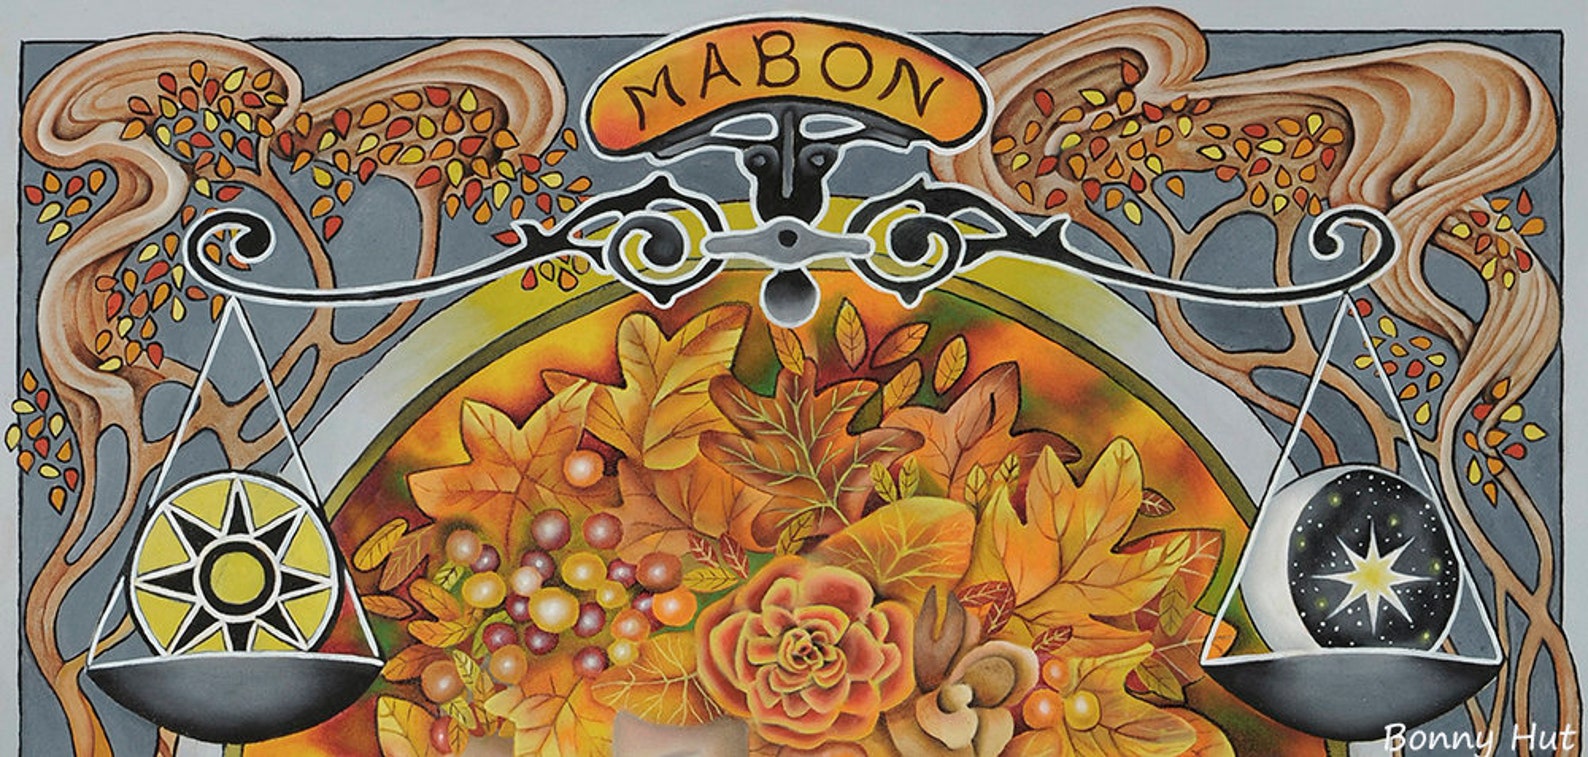 Autumn Equinox Mabon Art Art Nouveau Pagan Sabbat Wiccan Etsy